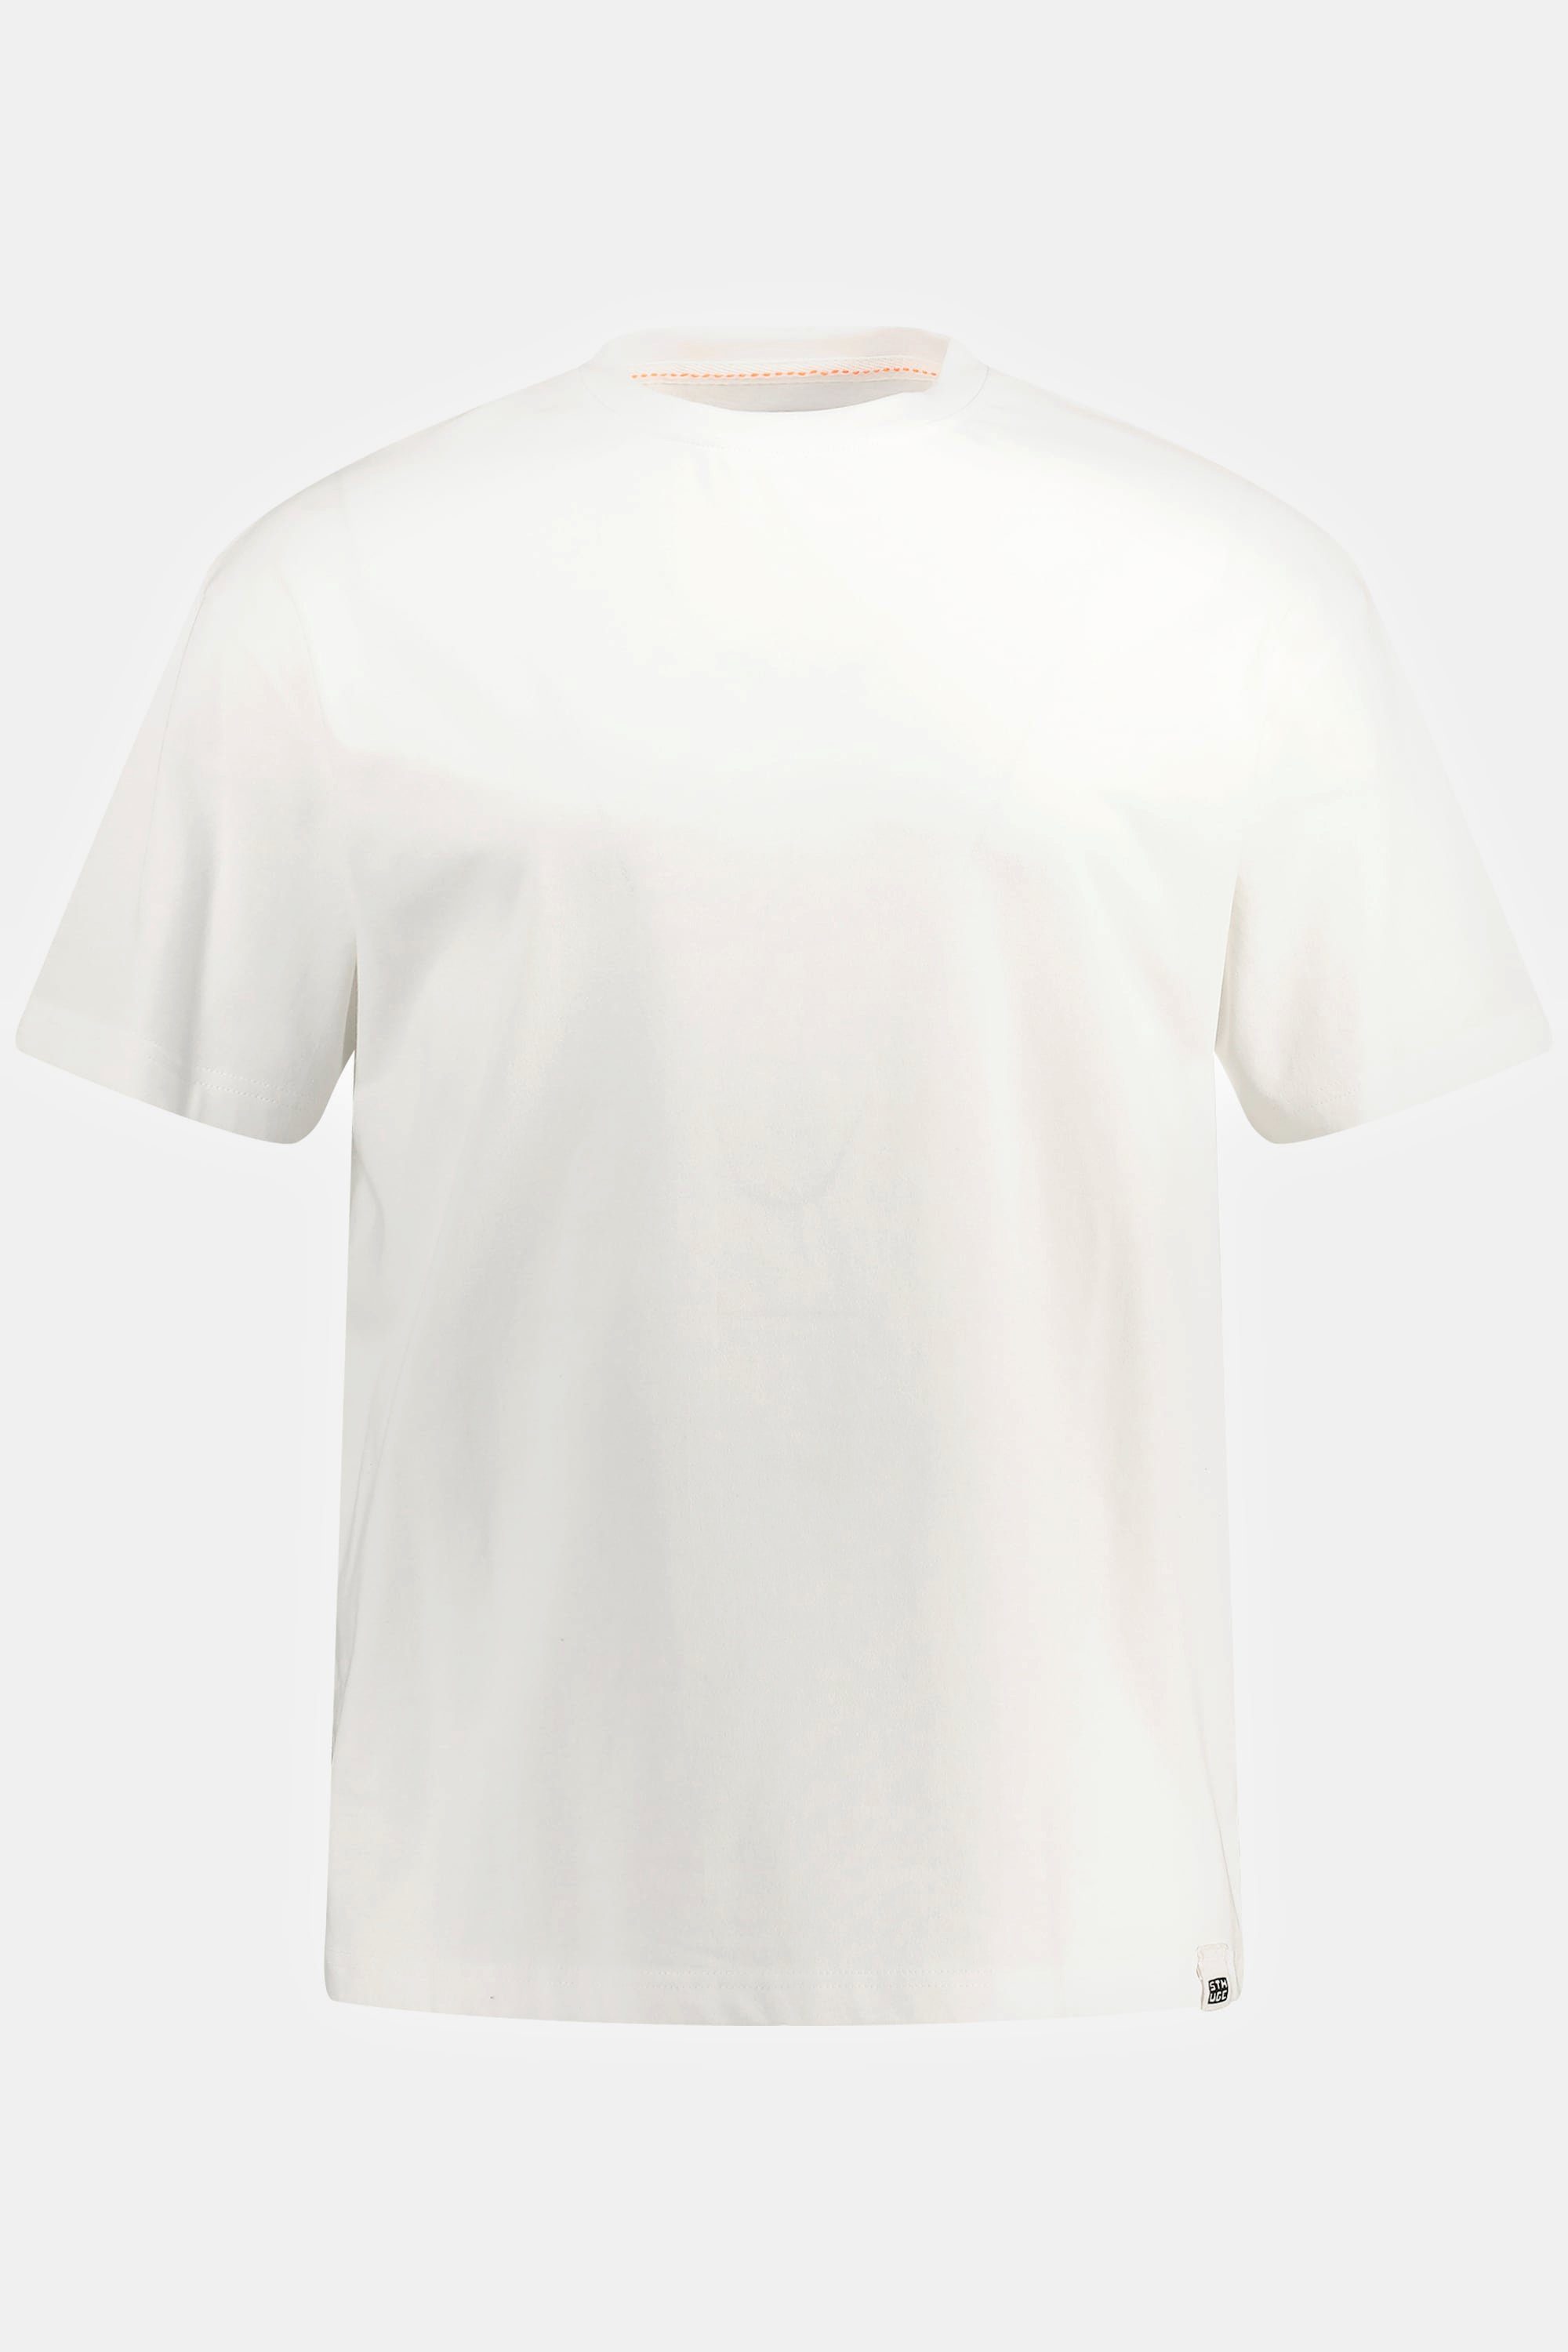 Rücken-Print STHUGE oversized Halbarm T-Shirt STHUGE T-Shirt